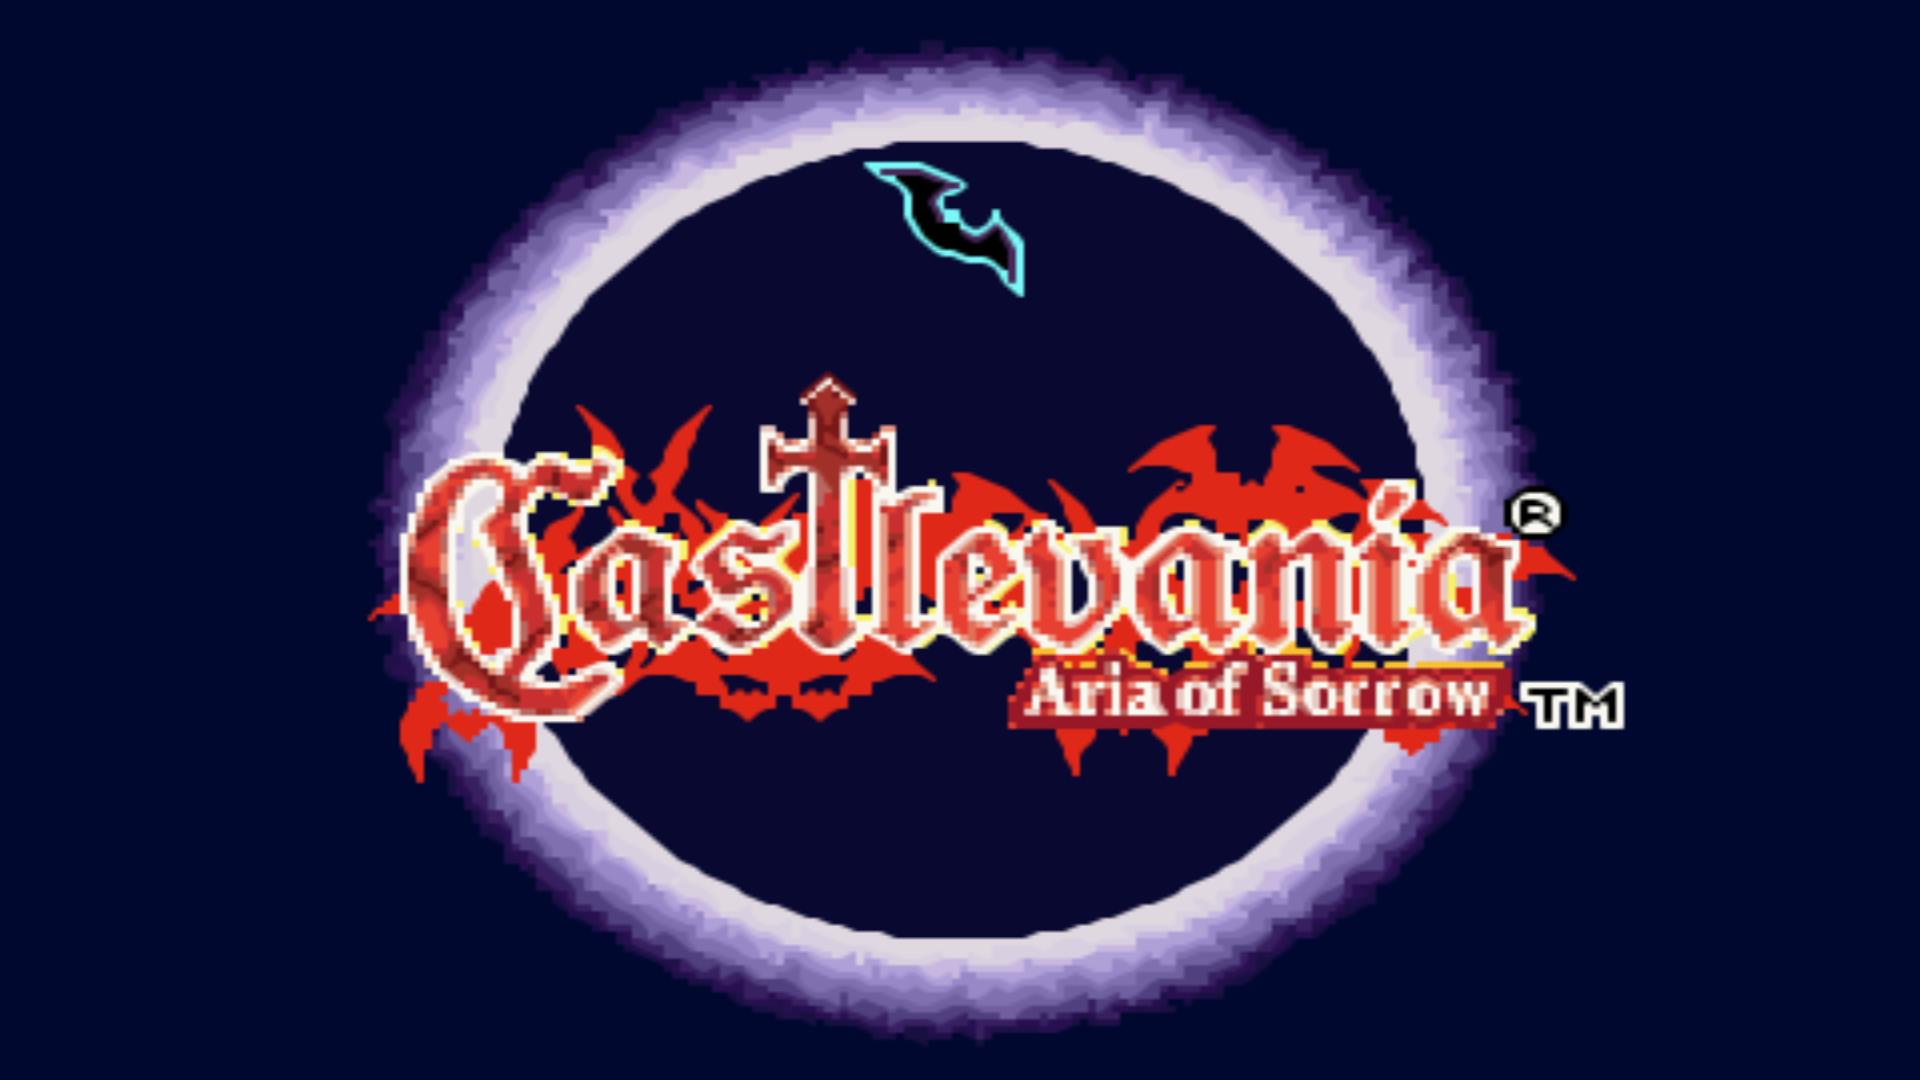 video game, castlevania: aria of sorrow, castlevania